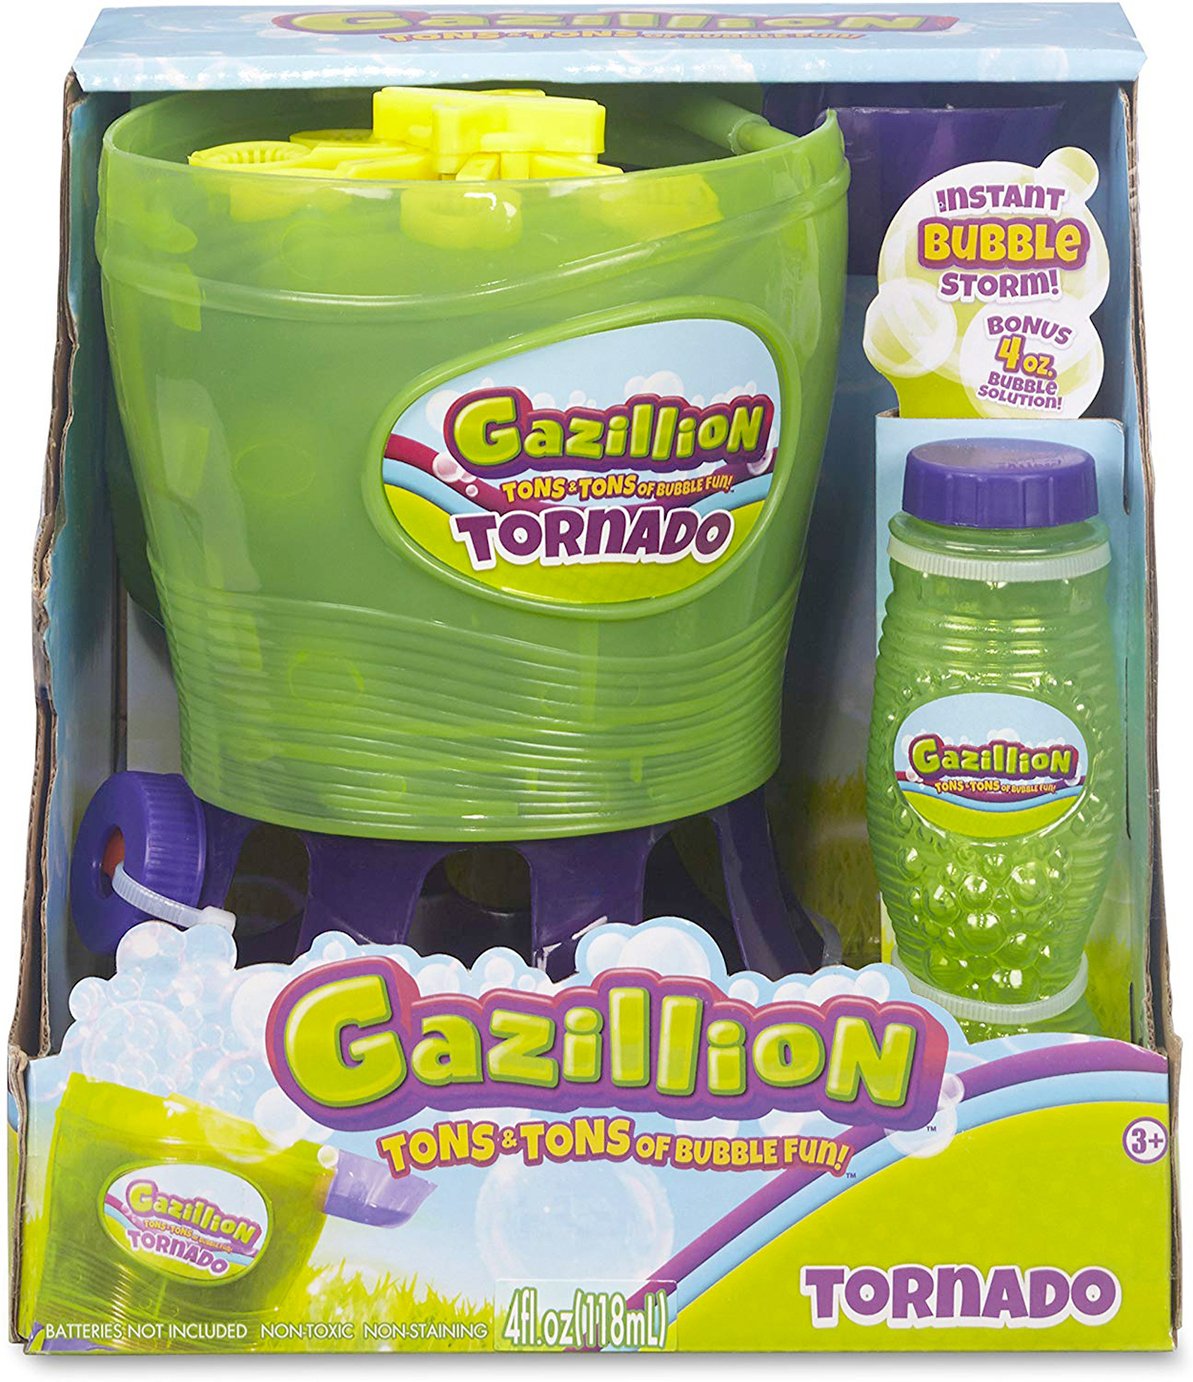 Gazillion Bubbles Tornado 2.0 Bubble Machine Review